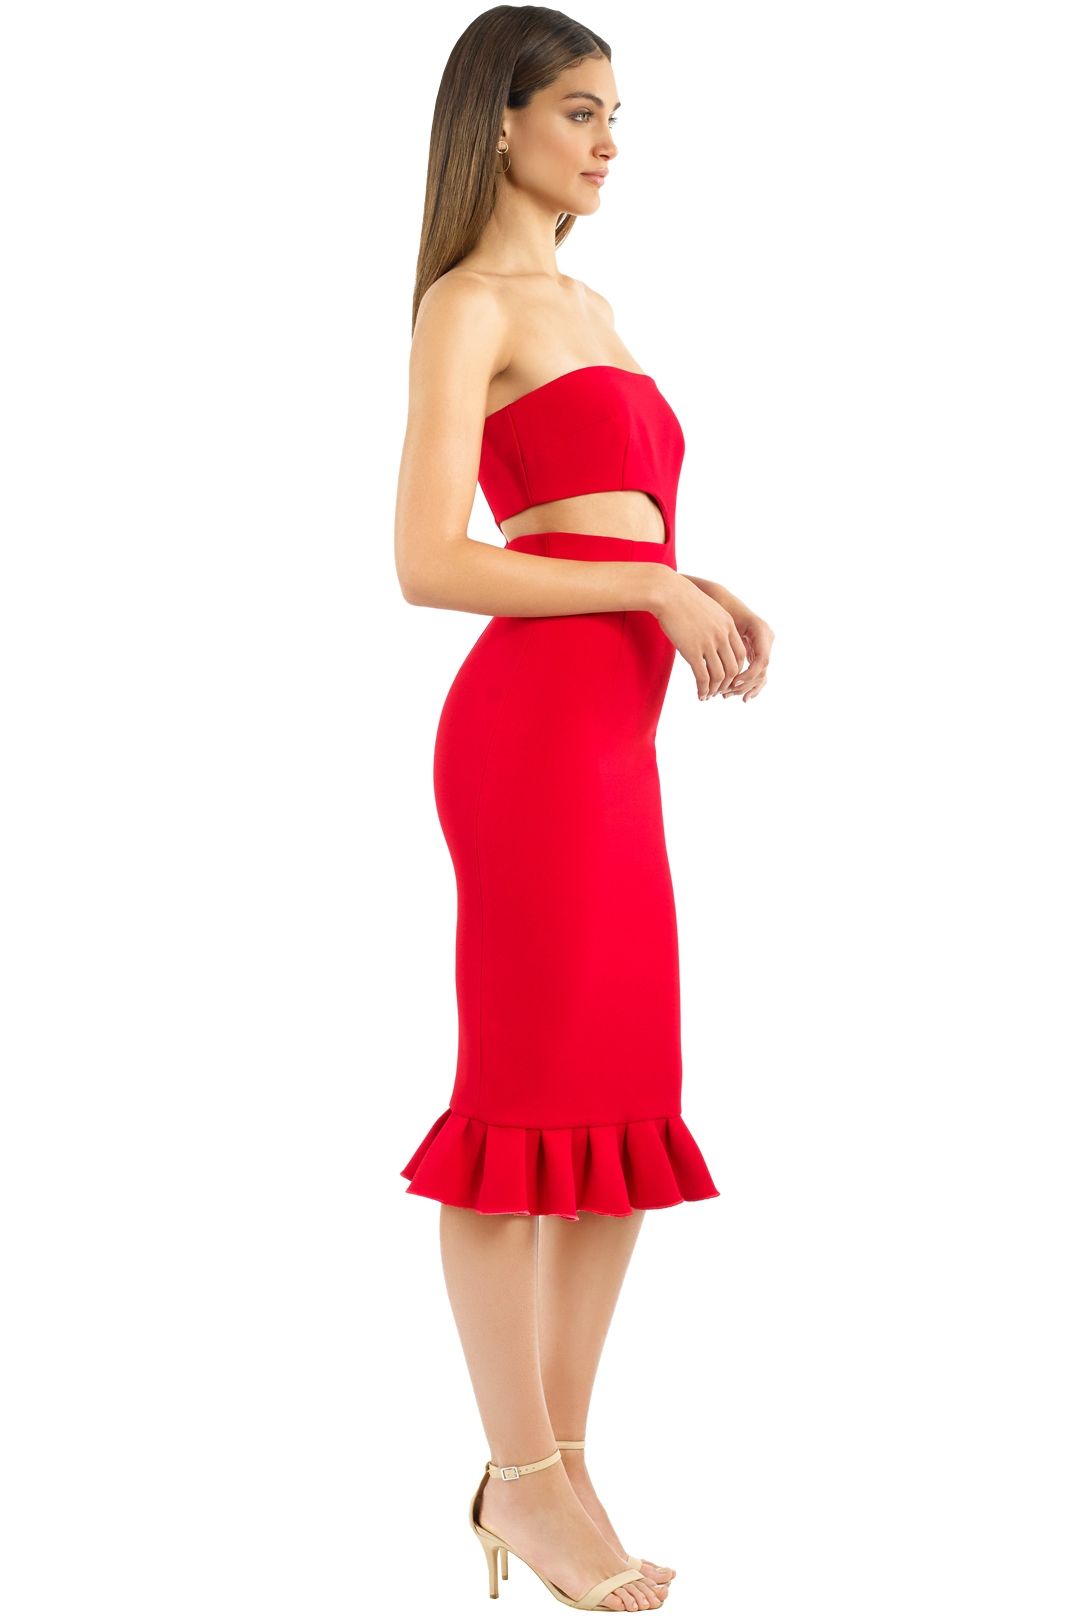 Yeojin Bae - Kaitlin Dress - Red - Side